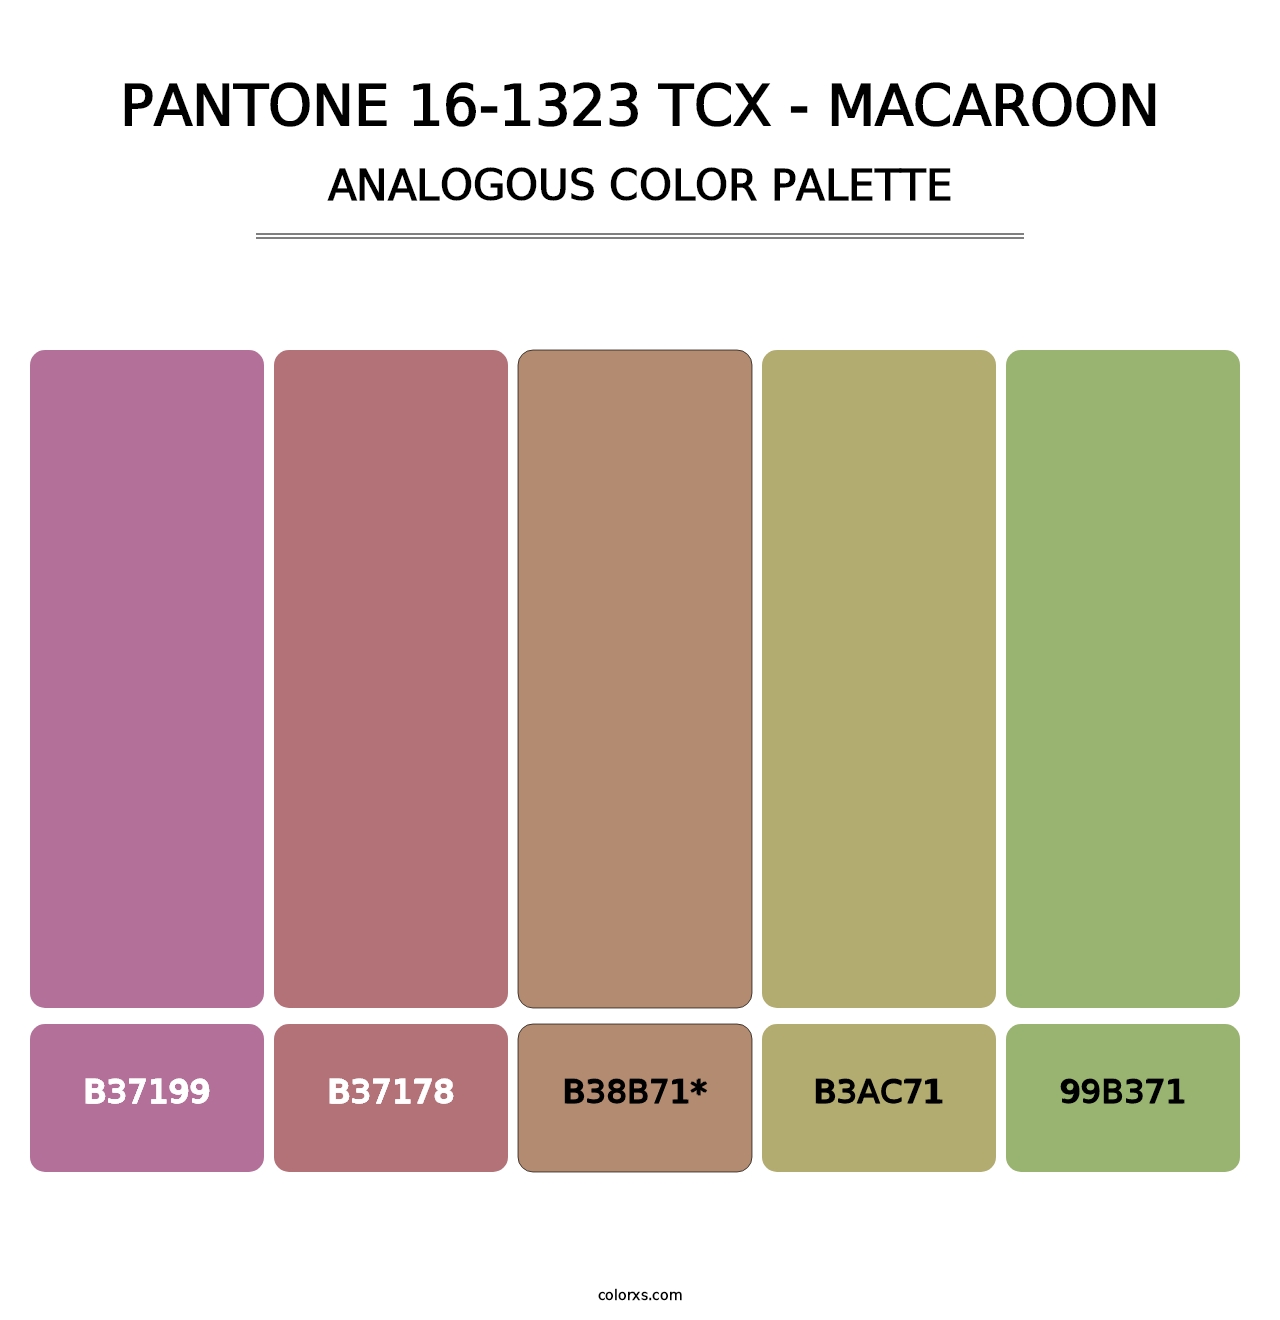 PANTONE 16-1323 TCX - Macaroon - Analogous Color Palette